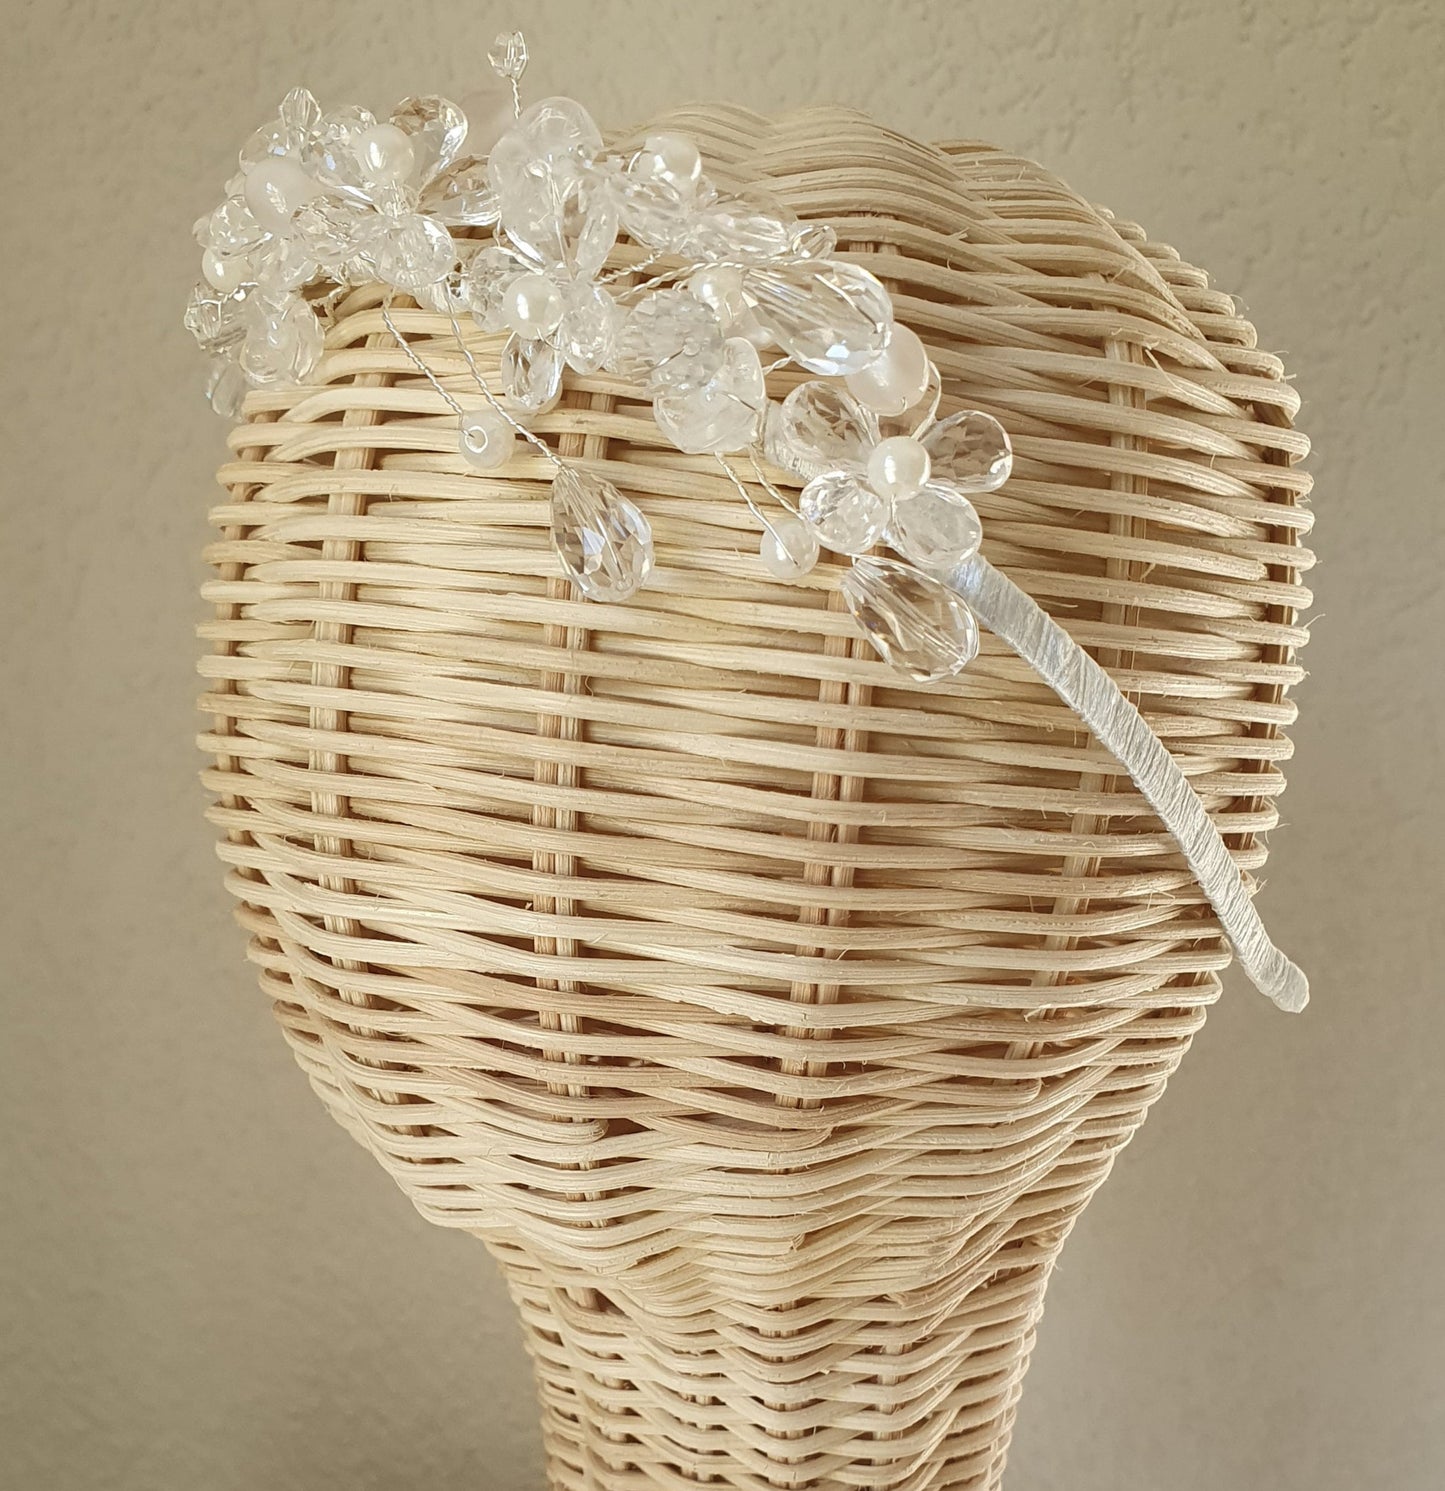 Handmade bridal headband with plastic flowers, tiara, hair accessory, diadem, elegant tiara, special events